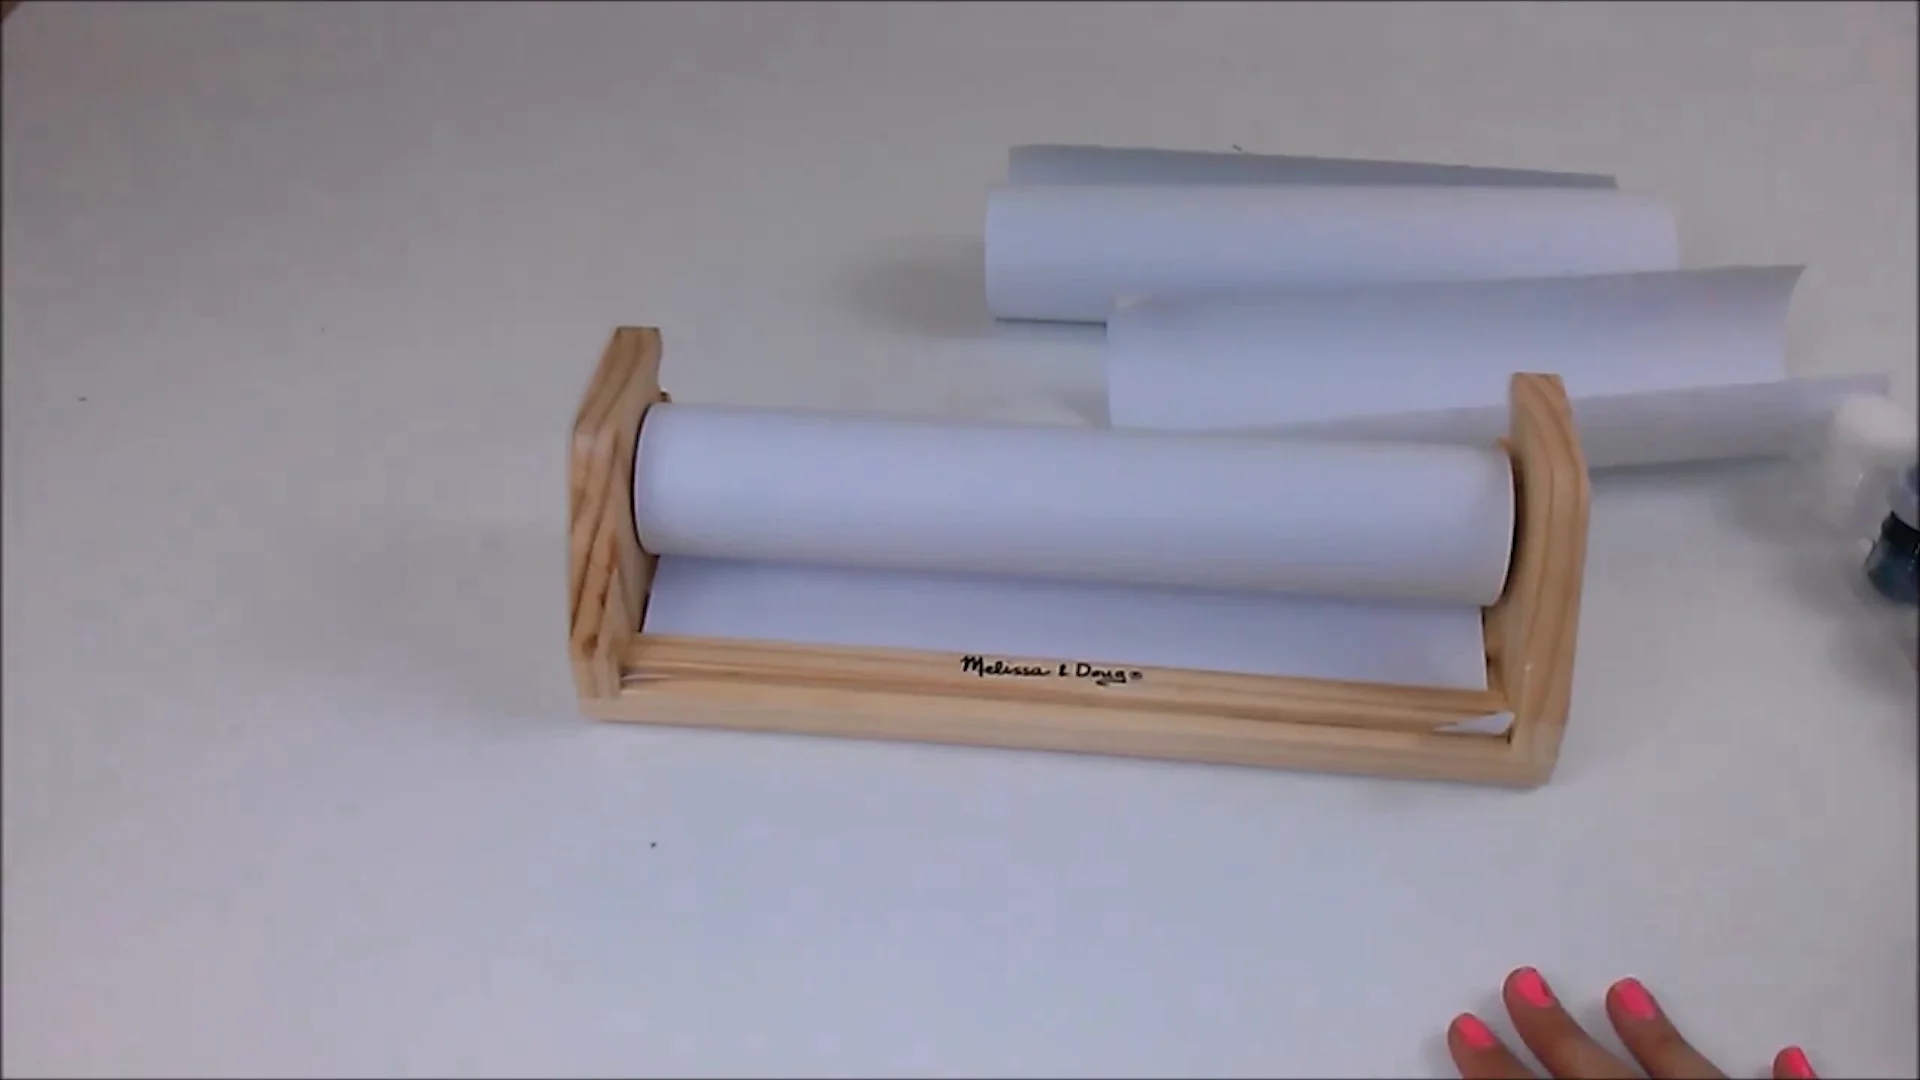 Tabletop Paper-Roll Dispenser